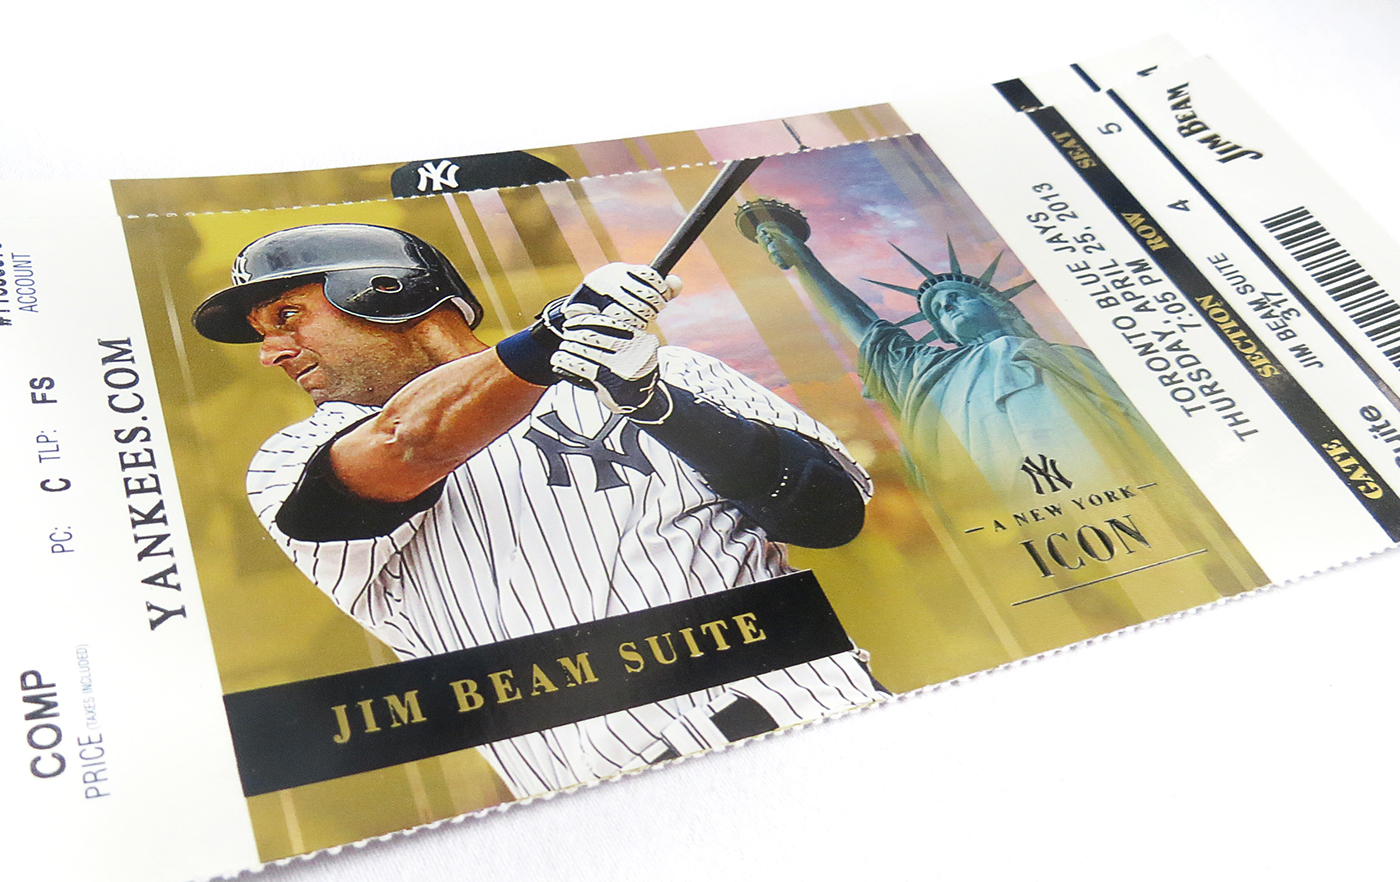 New York city yankees Manhattan Bronx major league baseball premium suites Landmarks season tickets Legacy Pinstripes